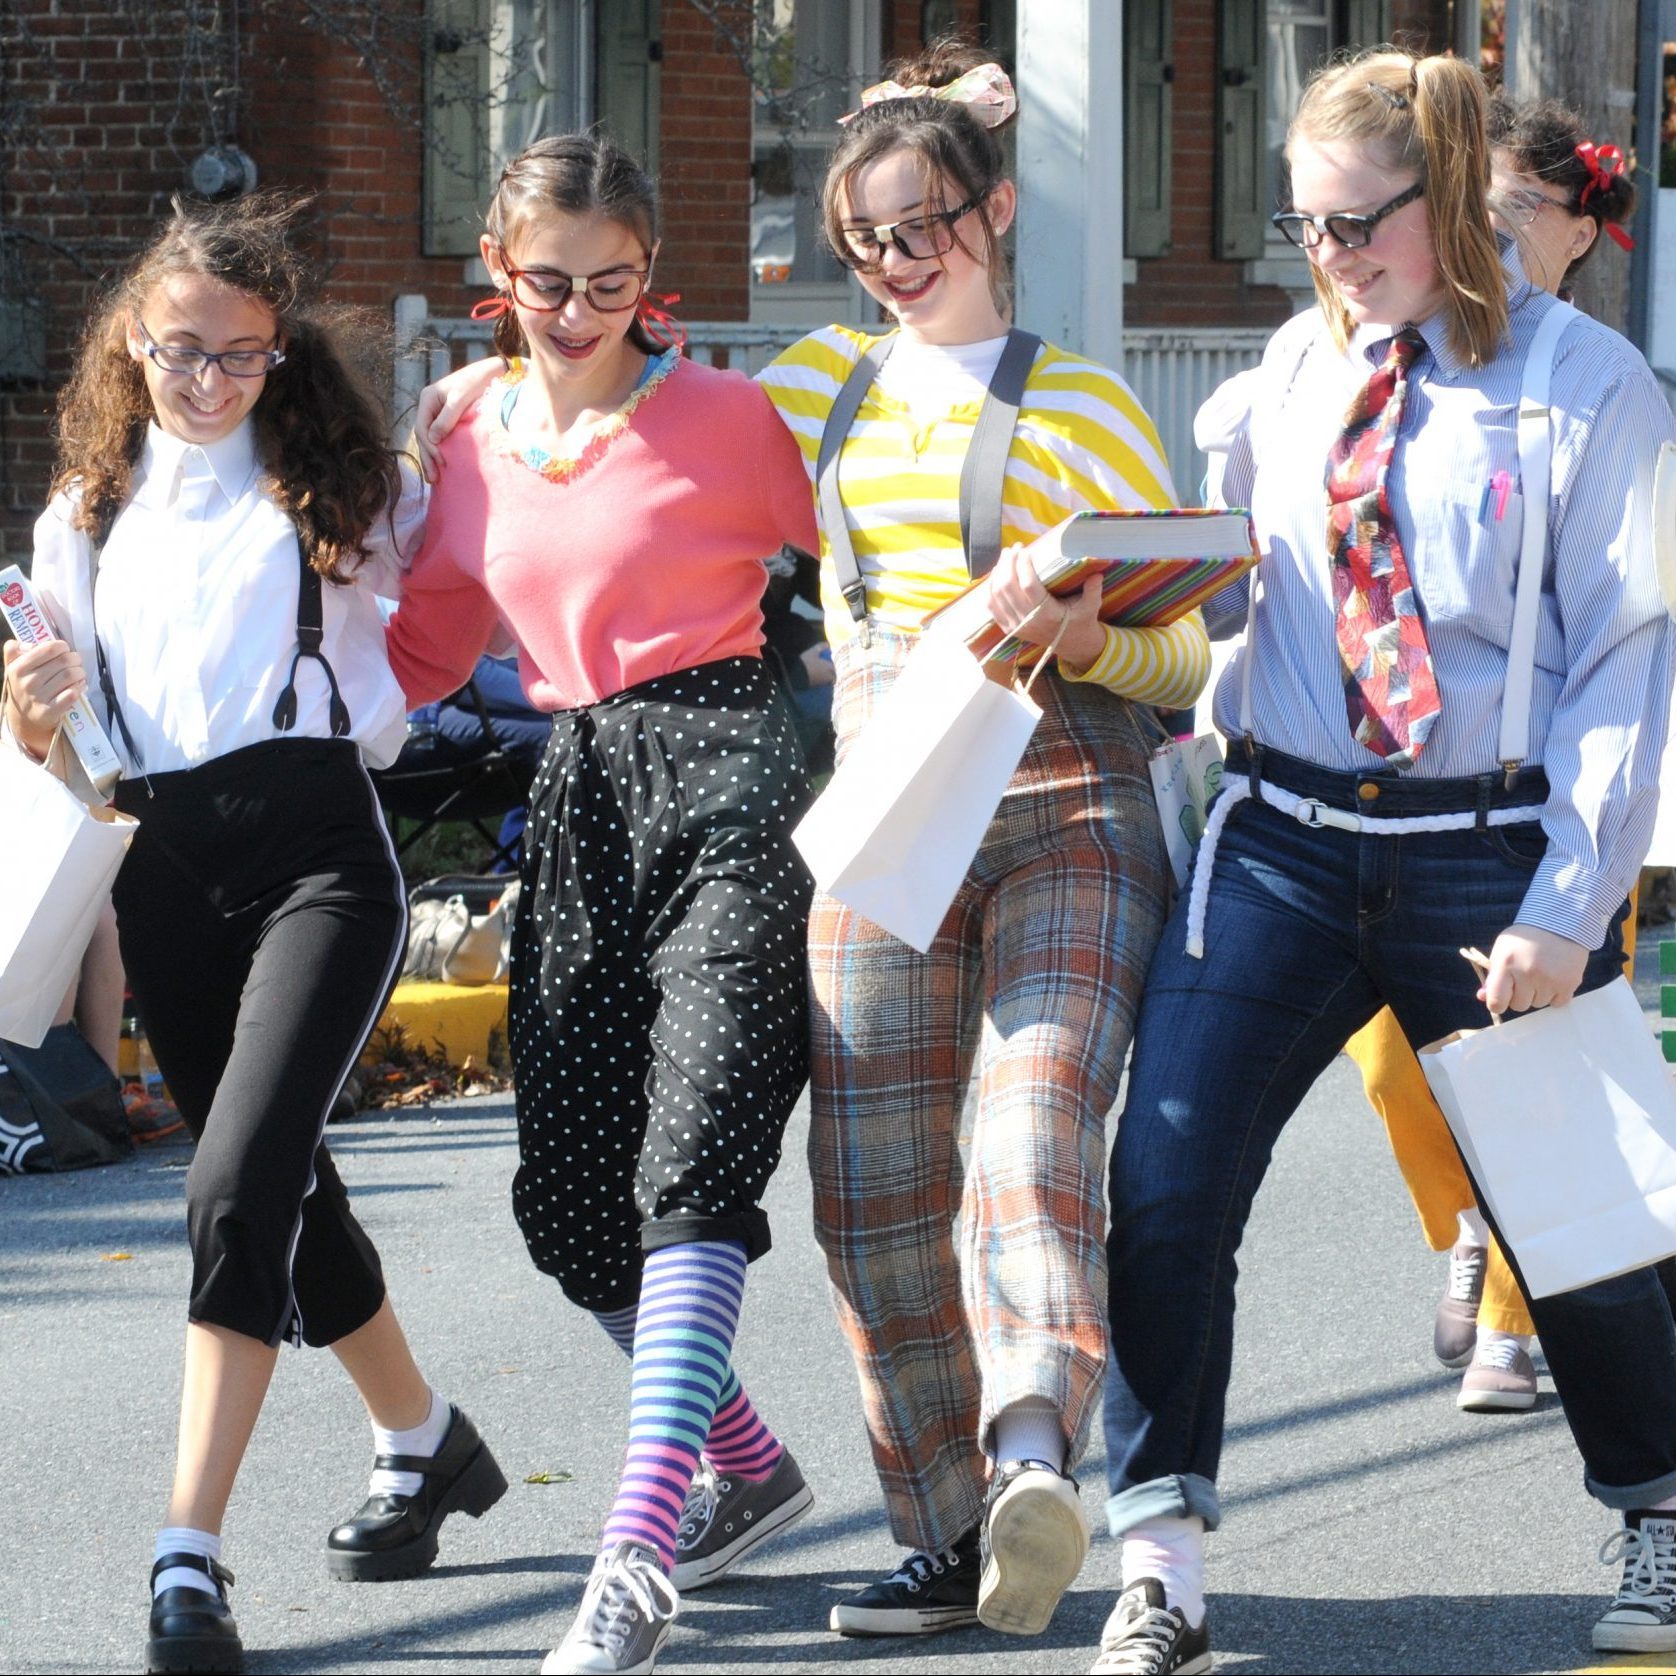 four young girls wearing nerd halloween costumes